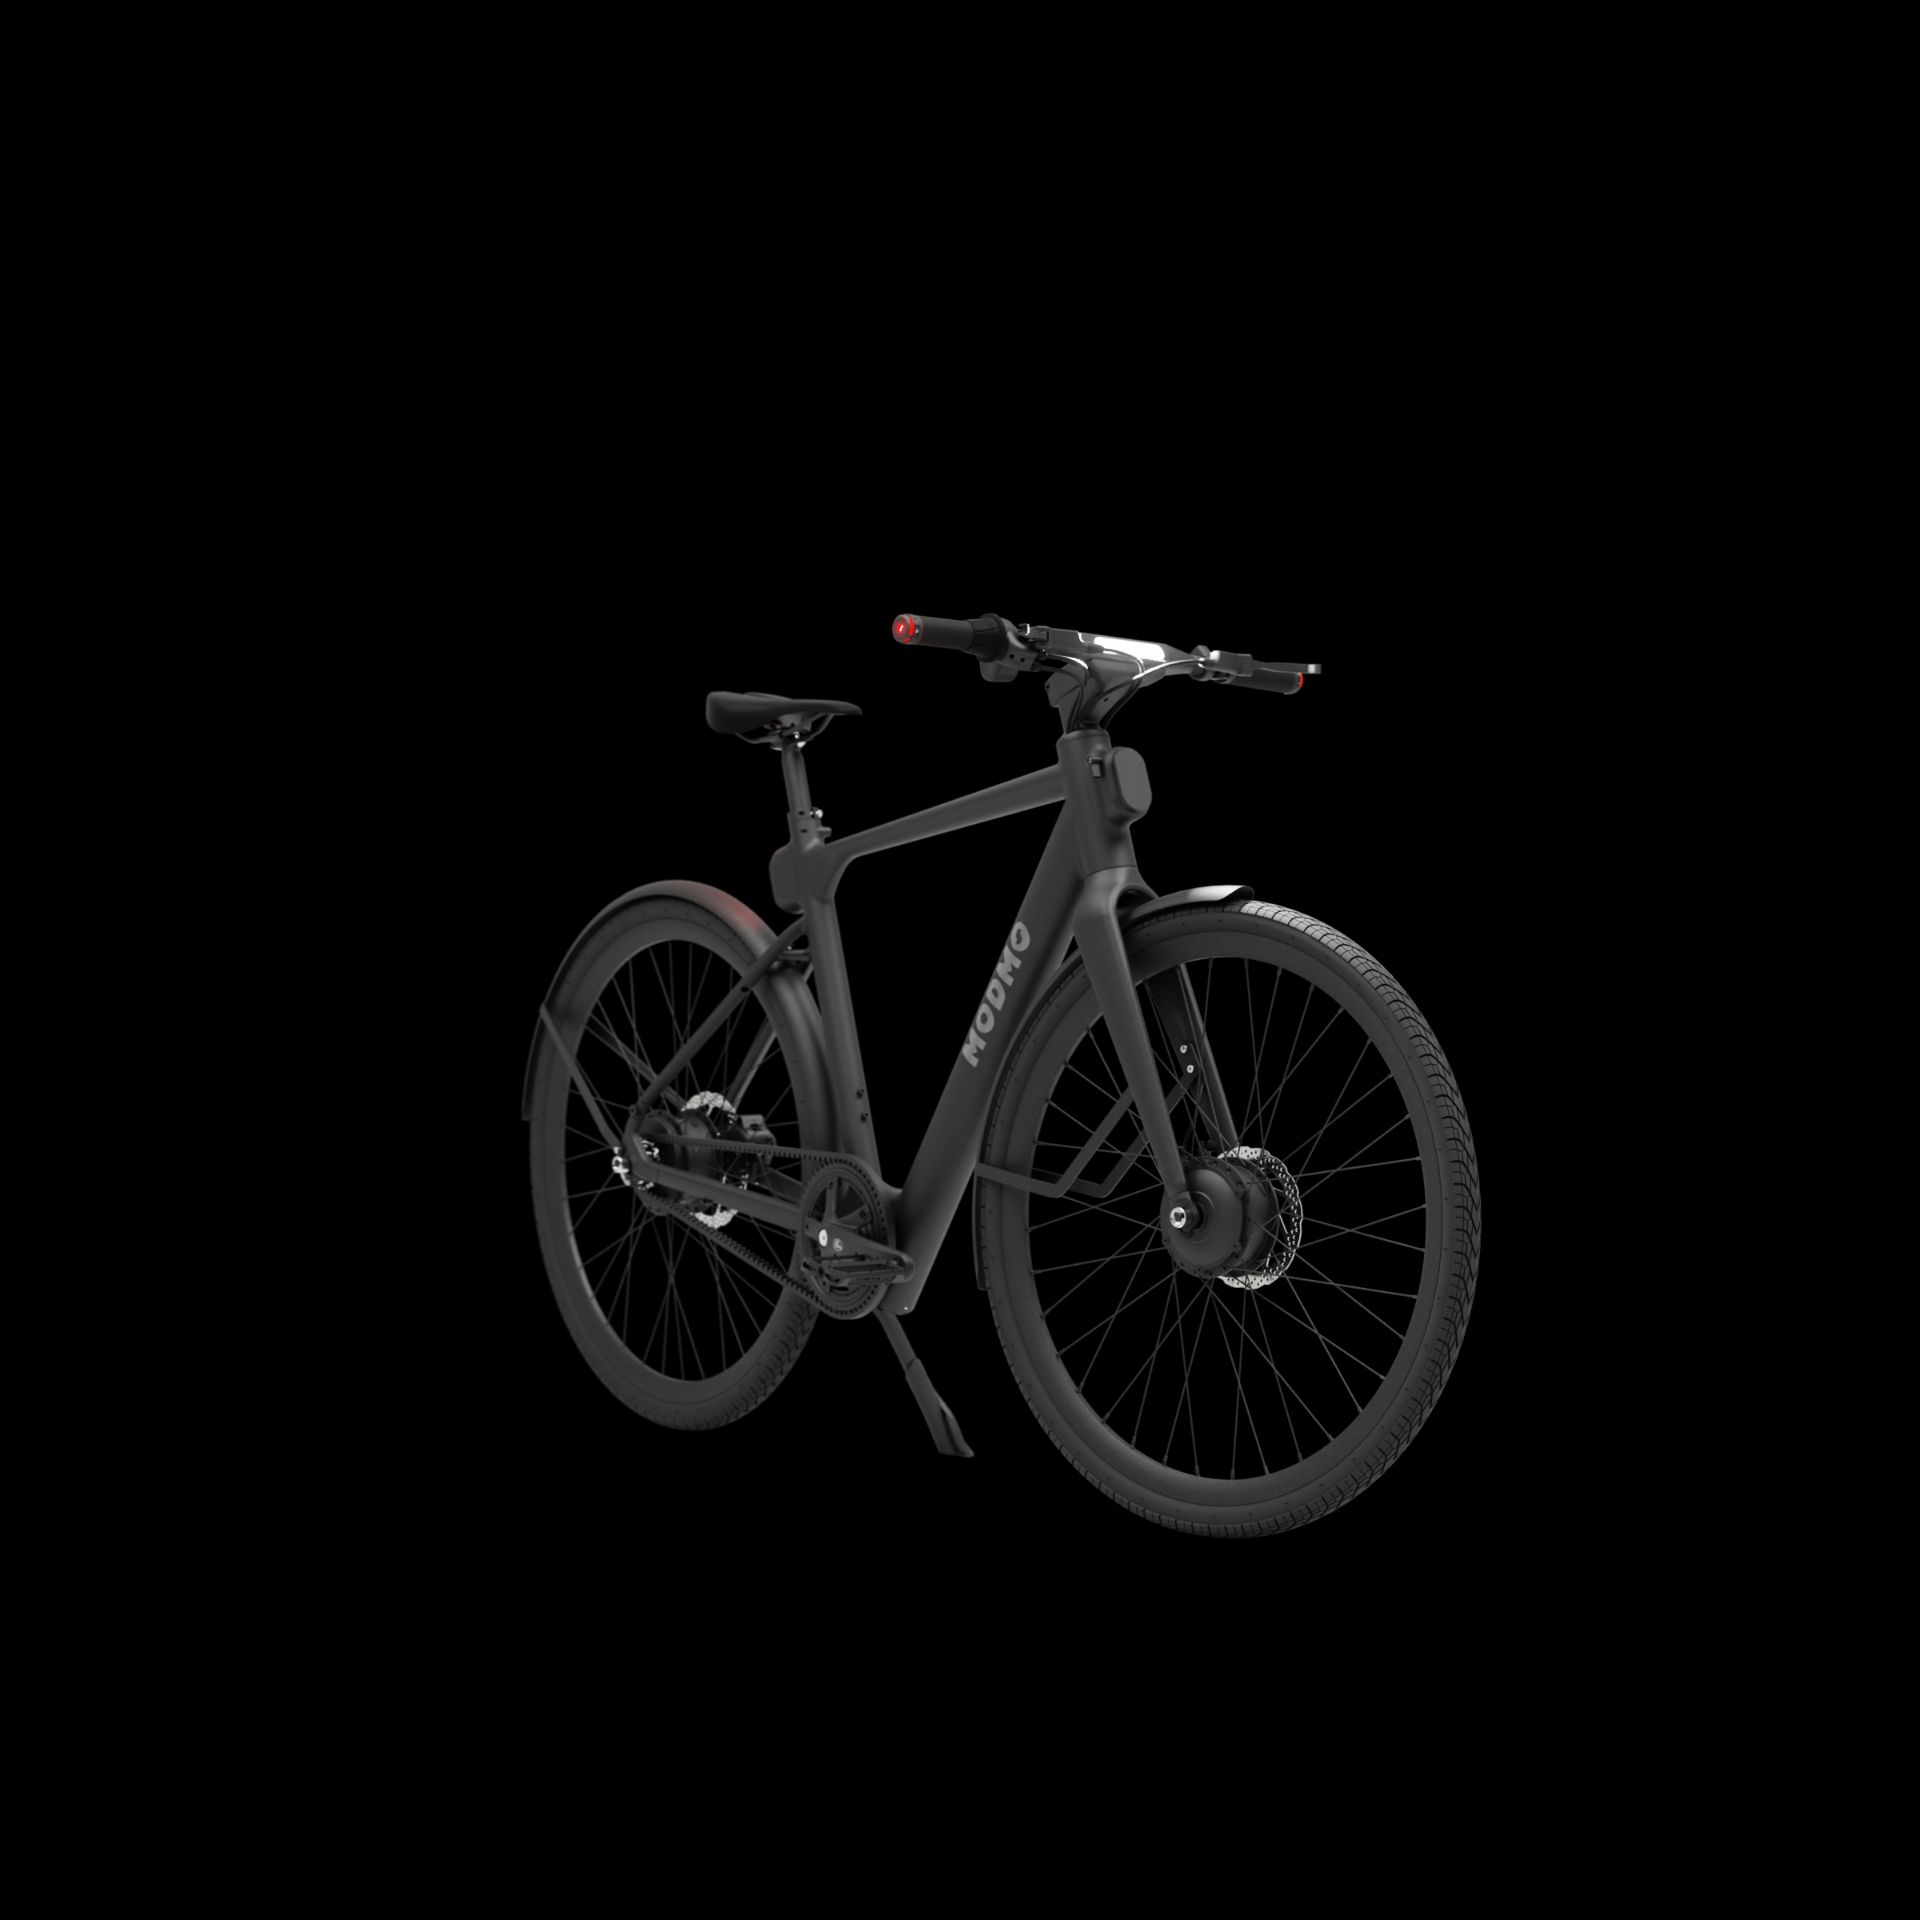 Modmo Saigon+ Electric Bicycle - RRP £2800 - Size L (Rider 175-190cm) - Image 6 of 17